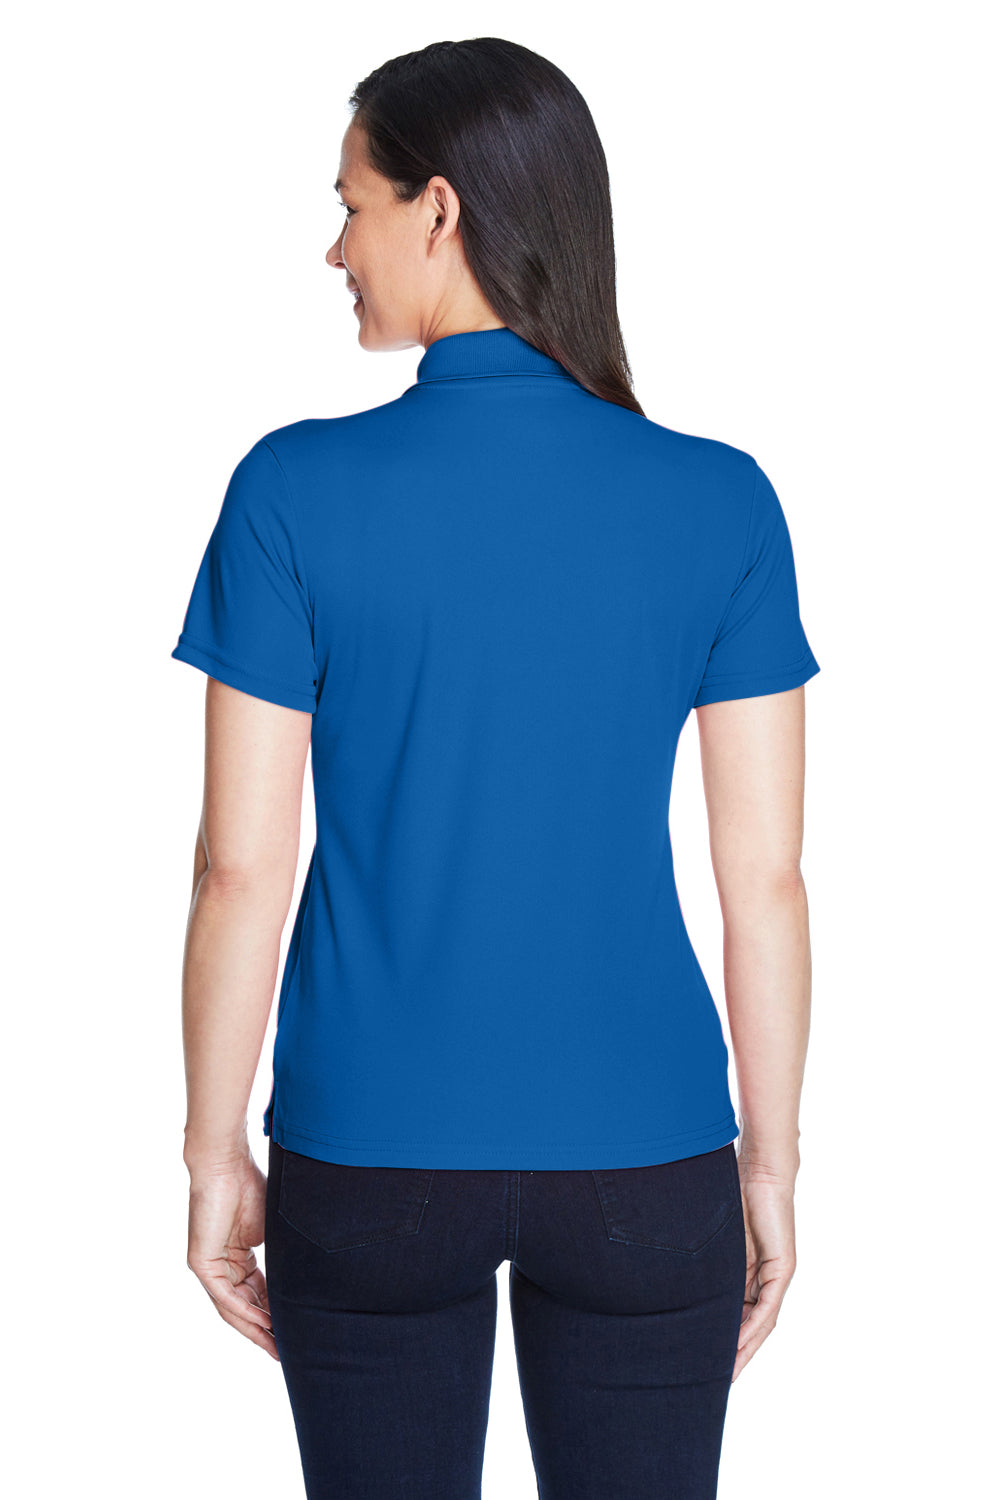 Core 365 78181 Womens Origin Performance Moisture Wicking Short Sleeve Polo Shirt Royal Blue Back